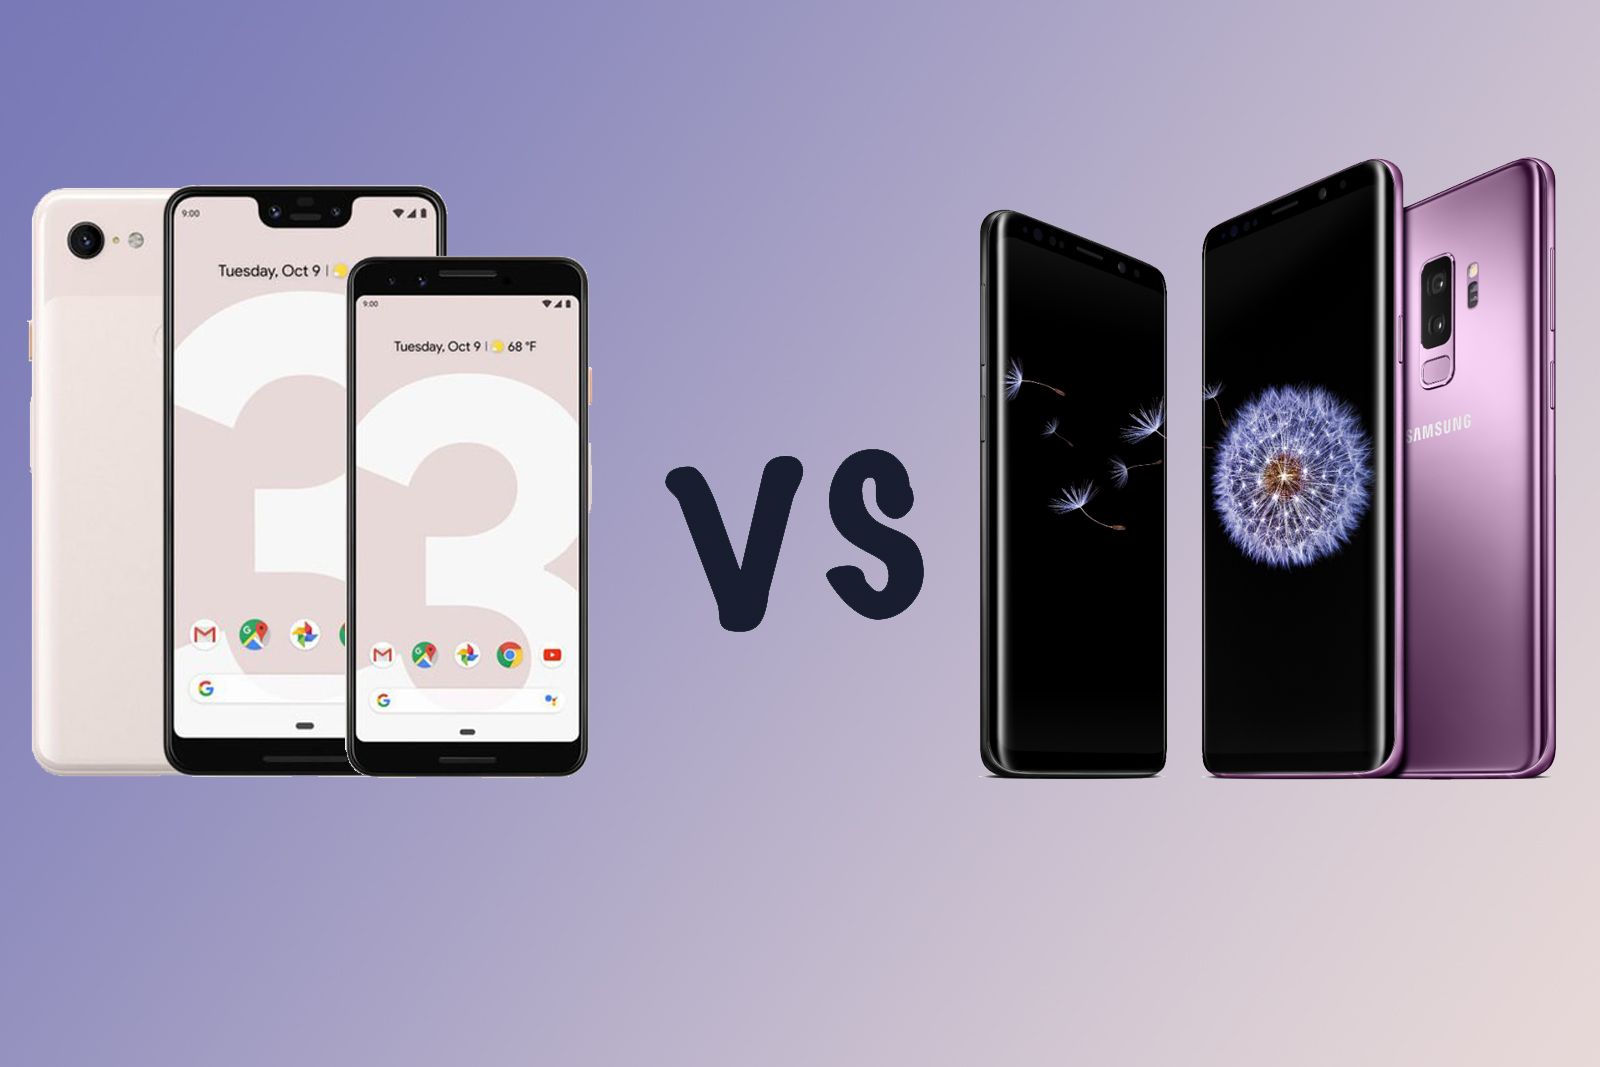 Pixel 3 XL vs Galaxy Note 9 